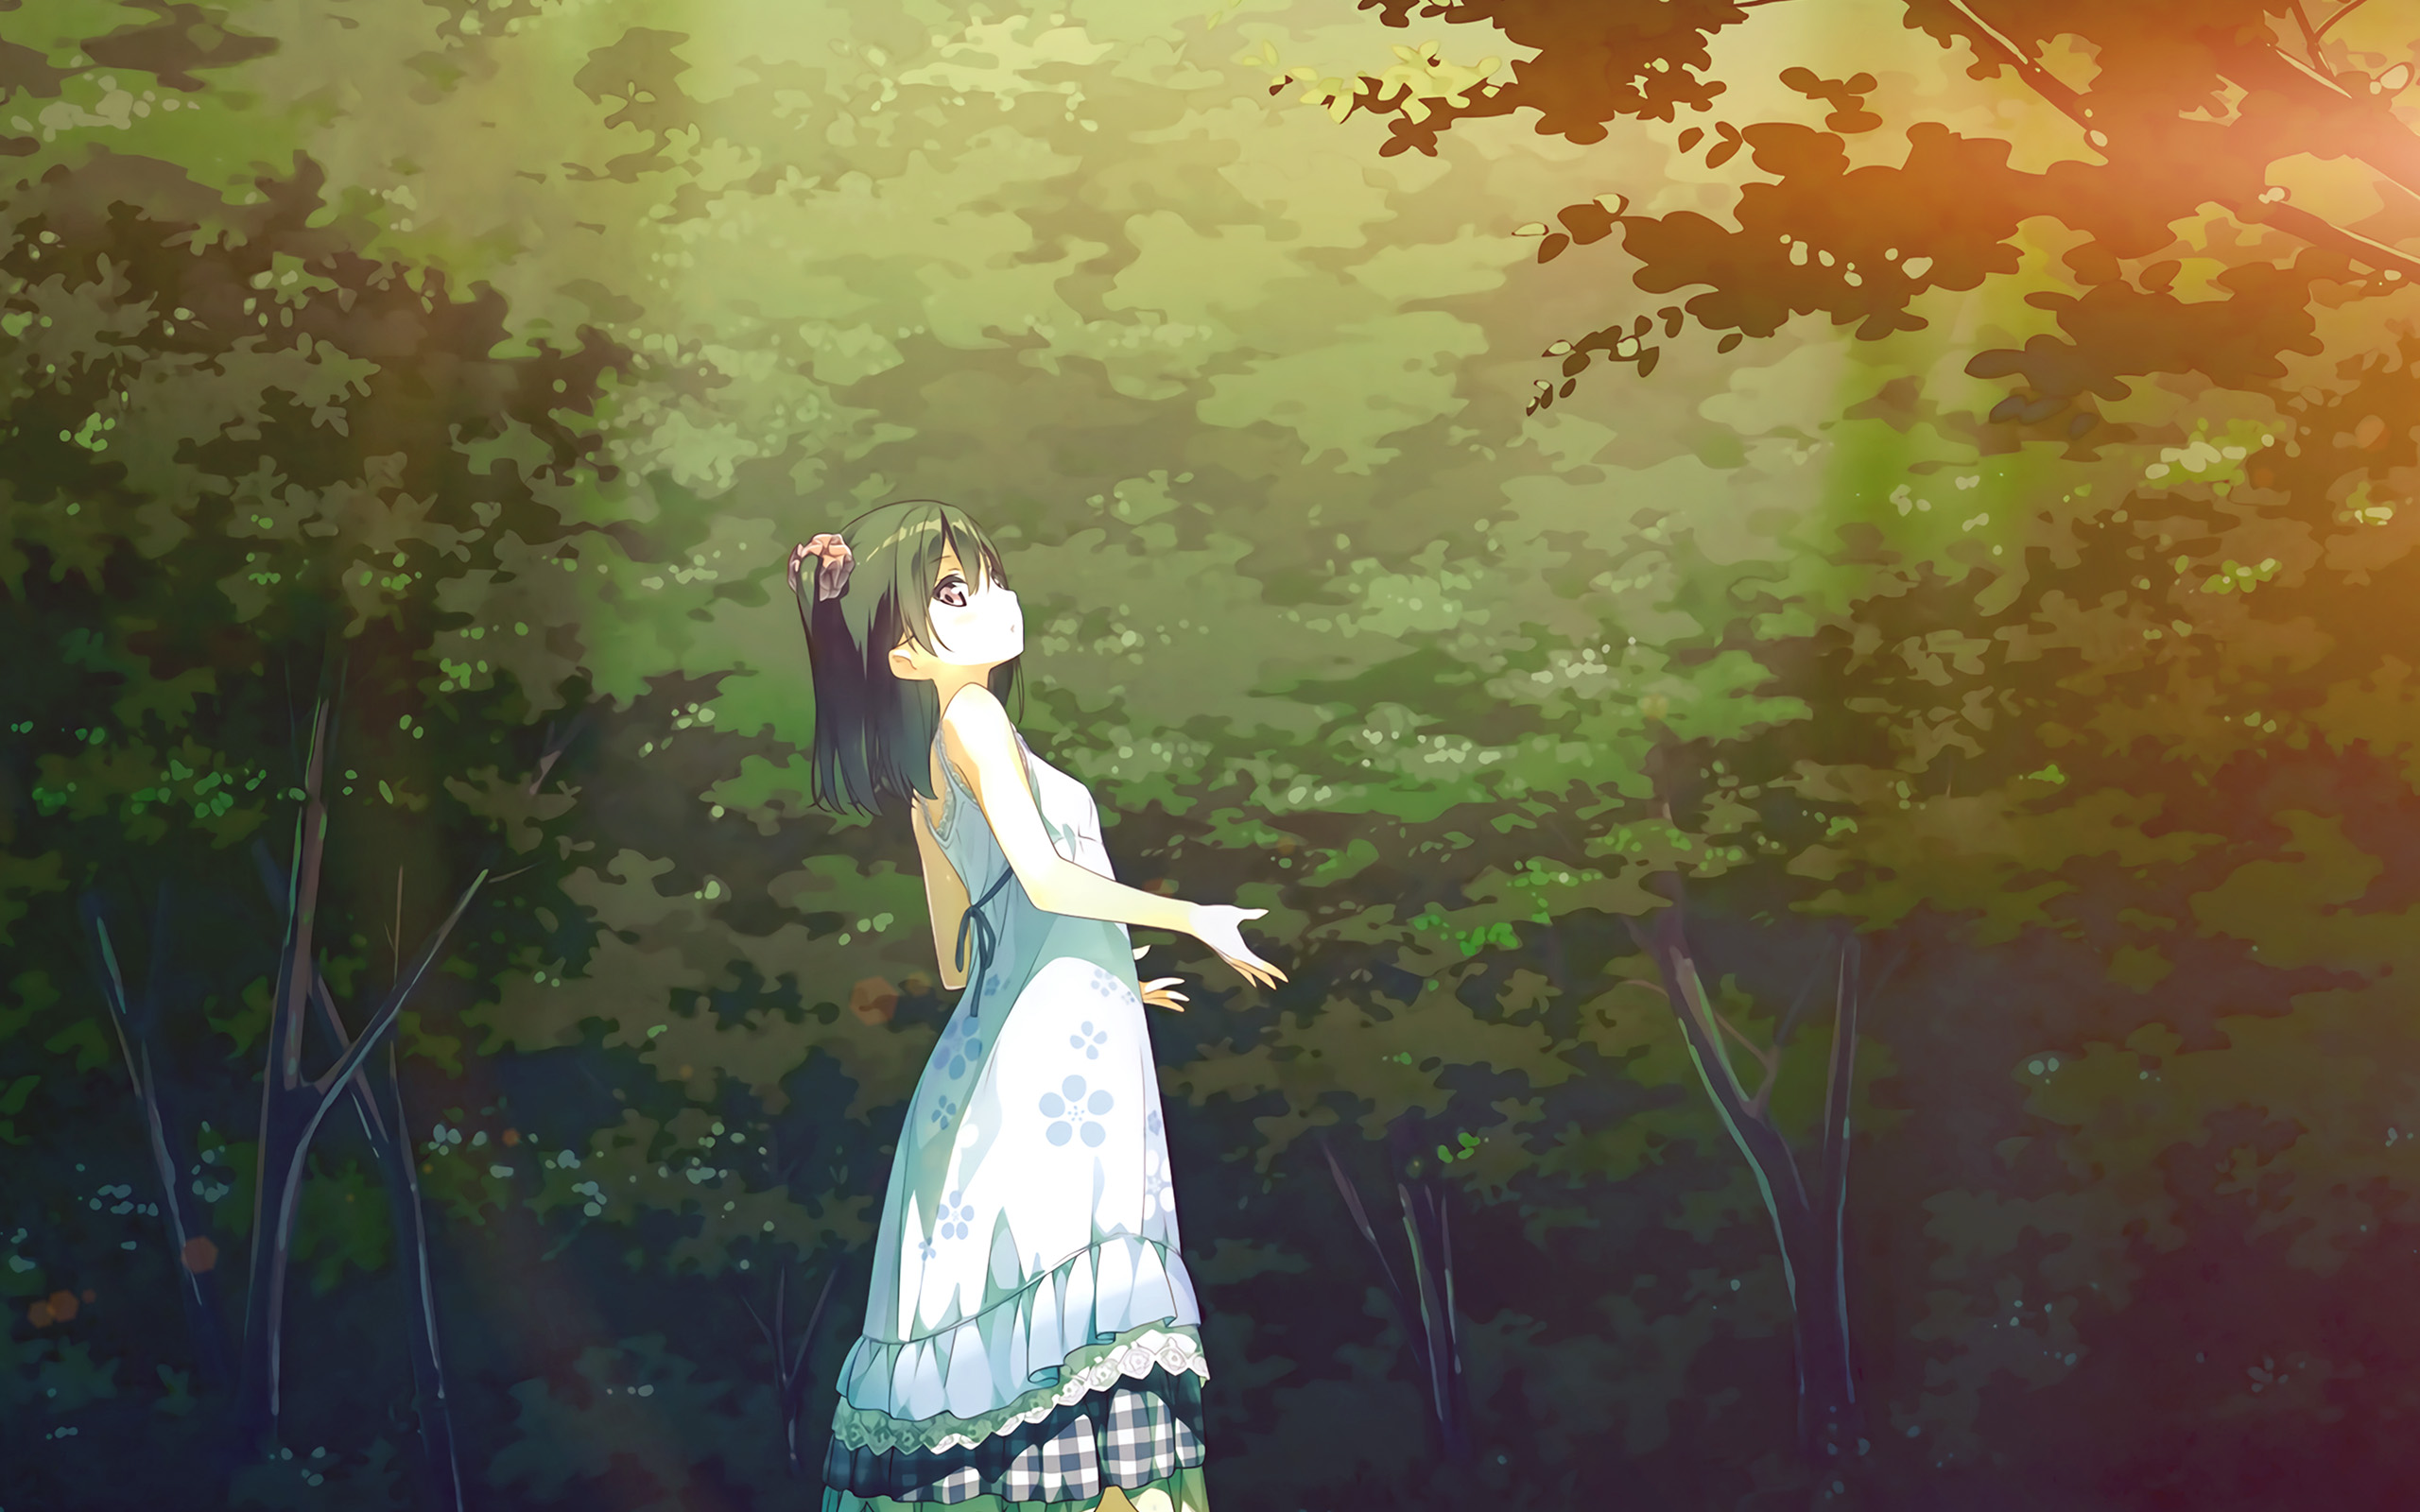 Anime Girl In Nature - 2560x1600 Wallpaper 